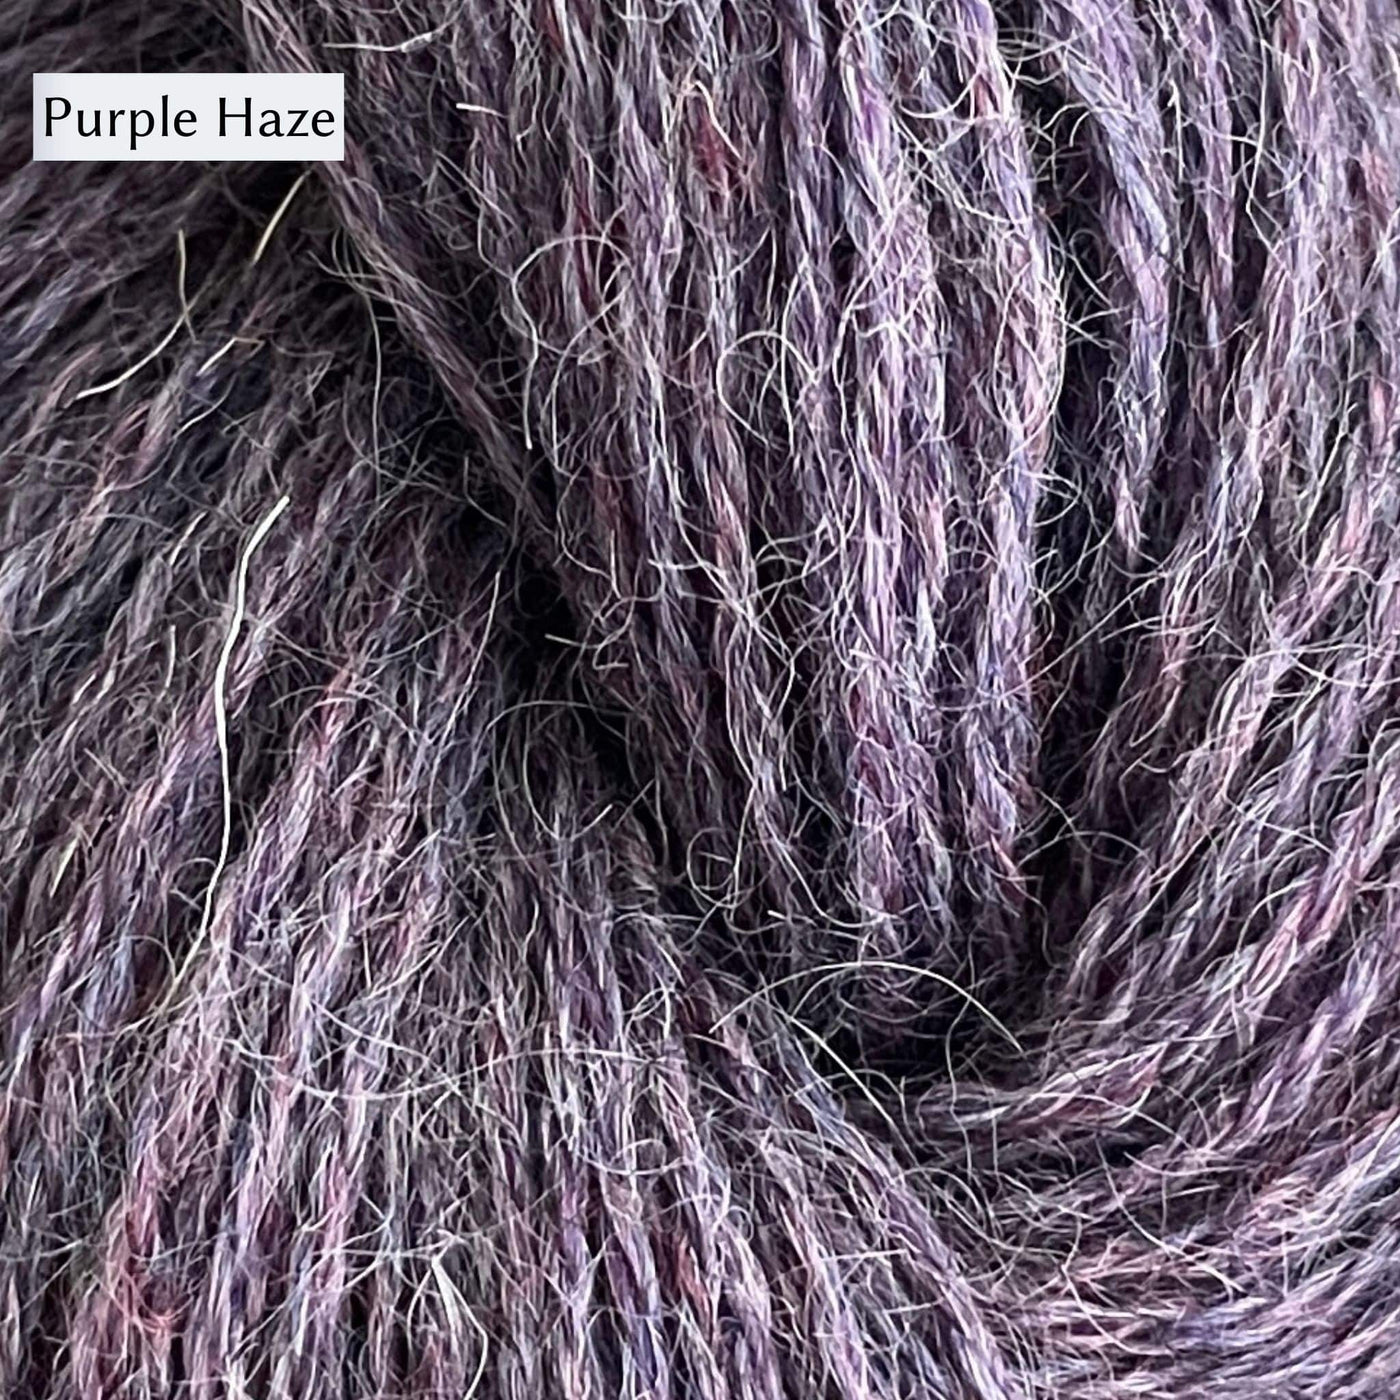 Jagger Spun Gotland Sport Weight Yarn in Purple Haze colorway. 